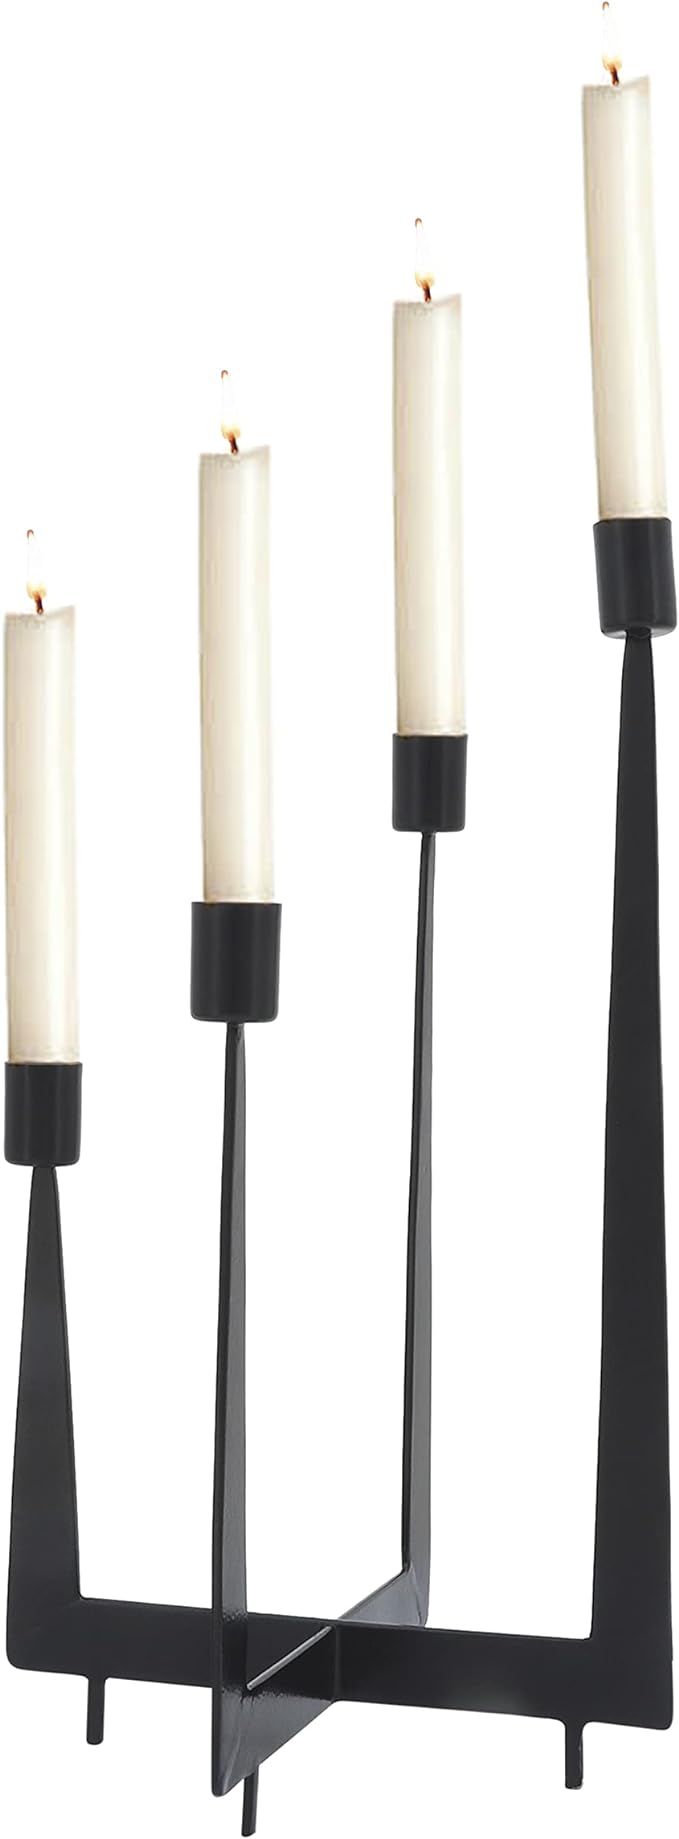 Sagebrook Home Novelty Metal Candle Holders and Tealights 4 Candlestick Indoor Outdoor Tealight C... | Amazon (US)